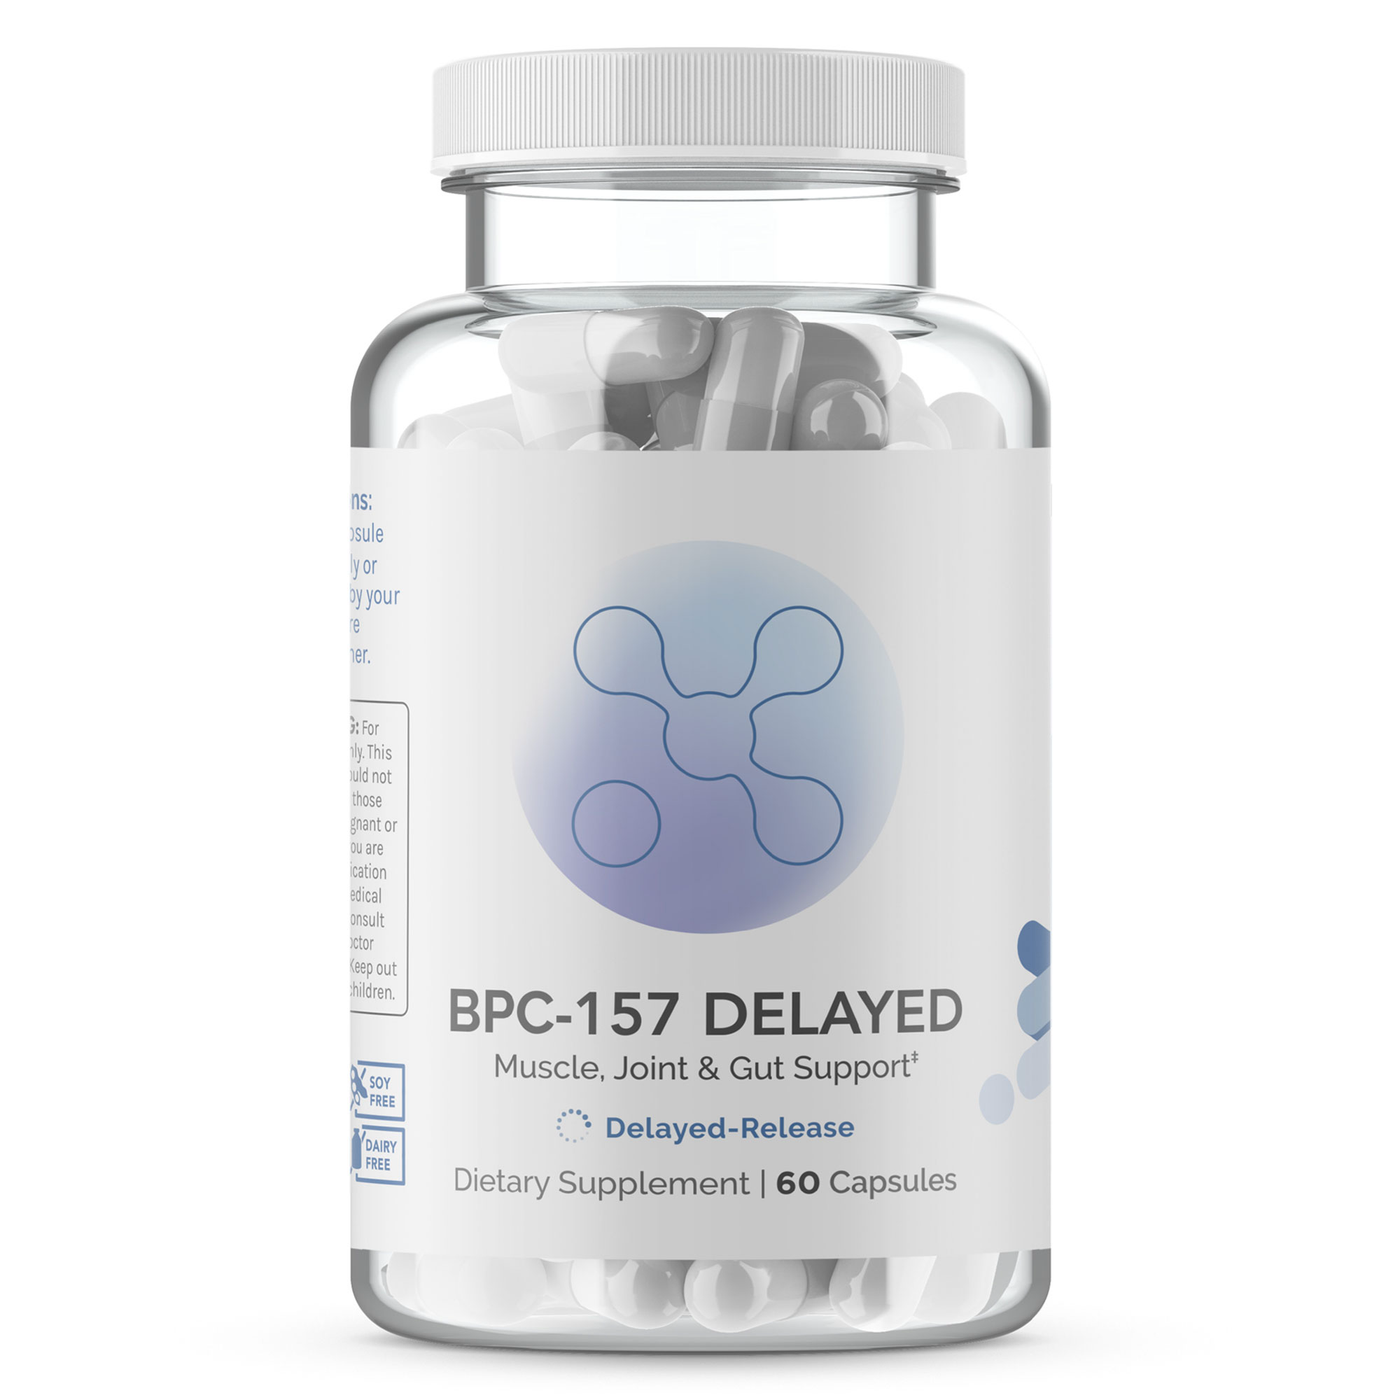 BPC-157 Delayed - 250mcg 60c Curated Wellness